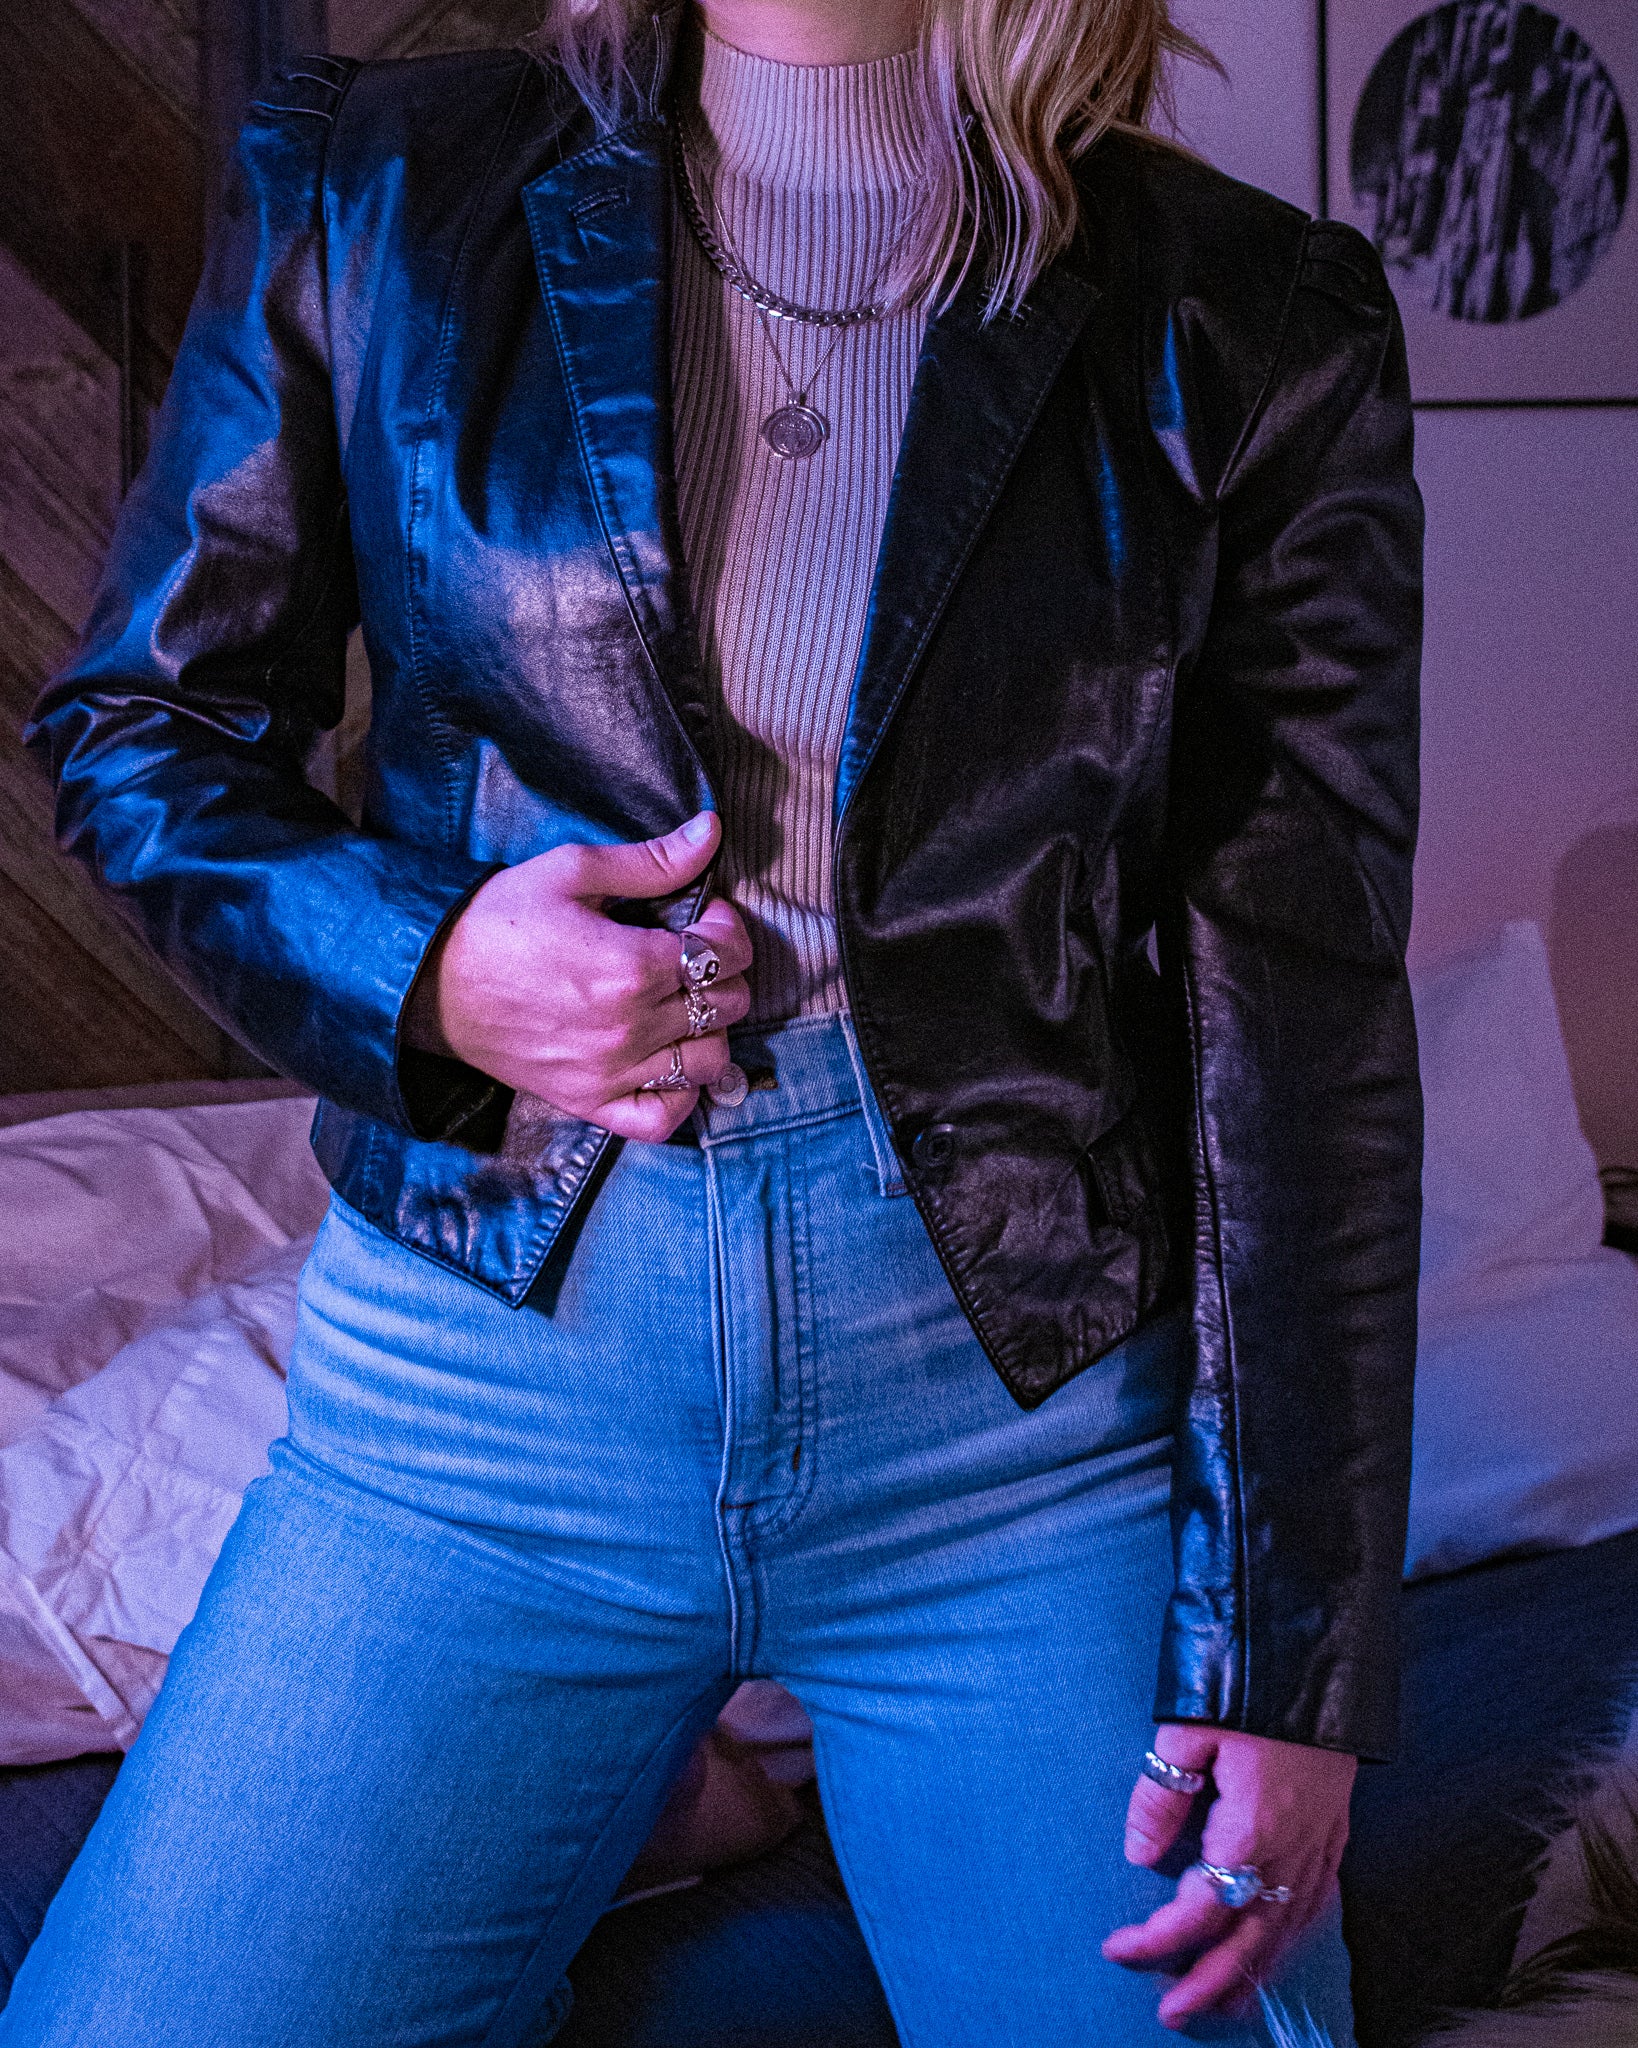 Cropped leather blazer